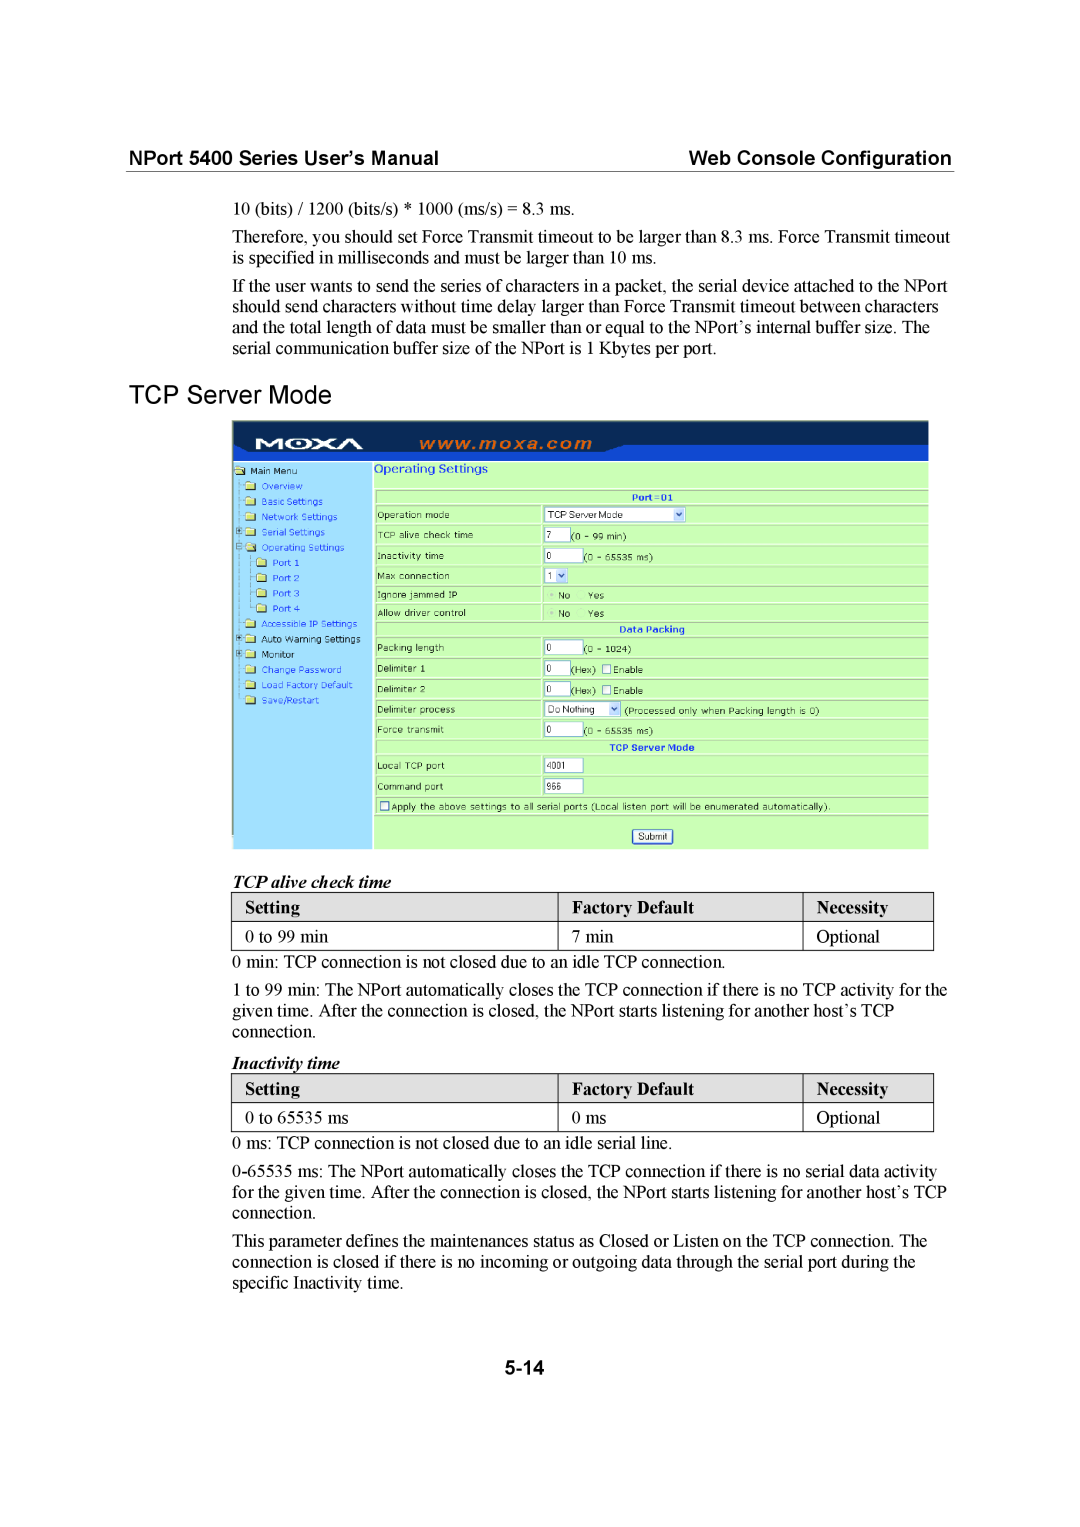 Moxa Technologies user manual TCP Server Mode, NPort 5400 Series User’s Manual, Web Console Configuration, 5-14 